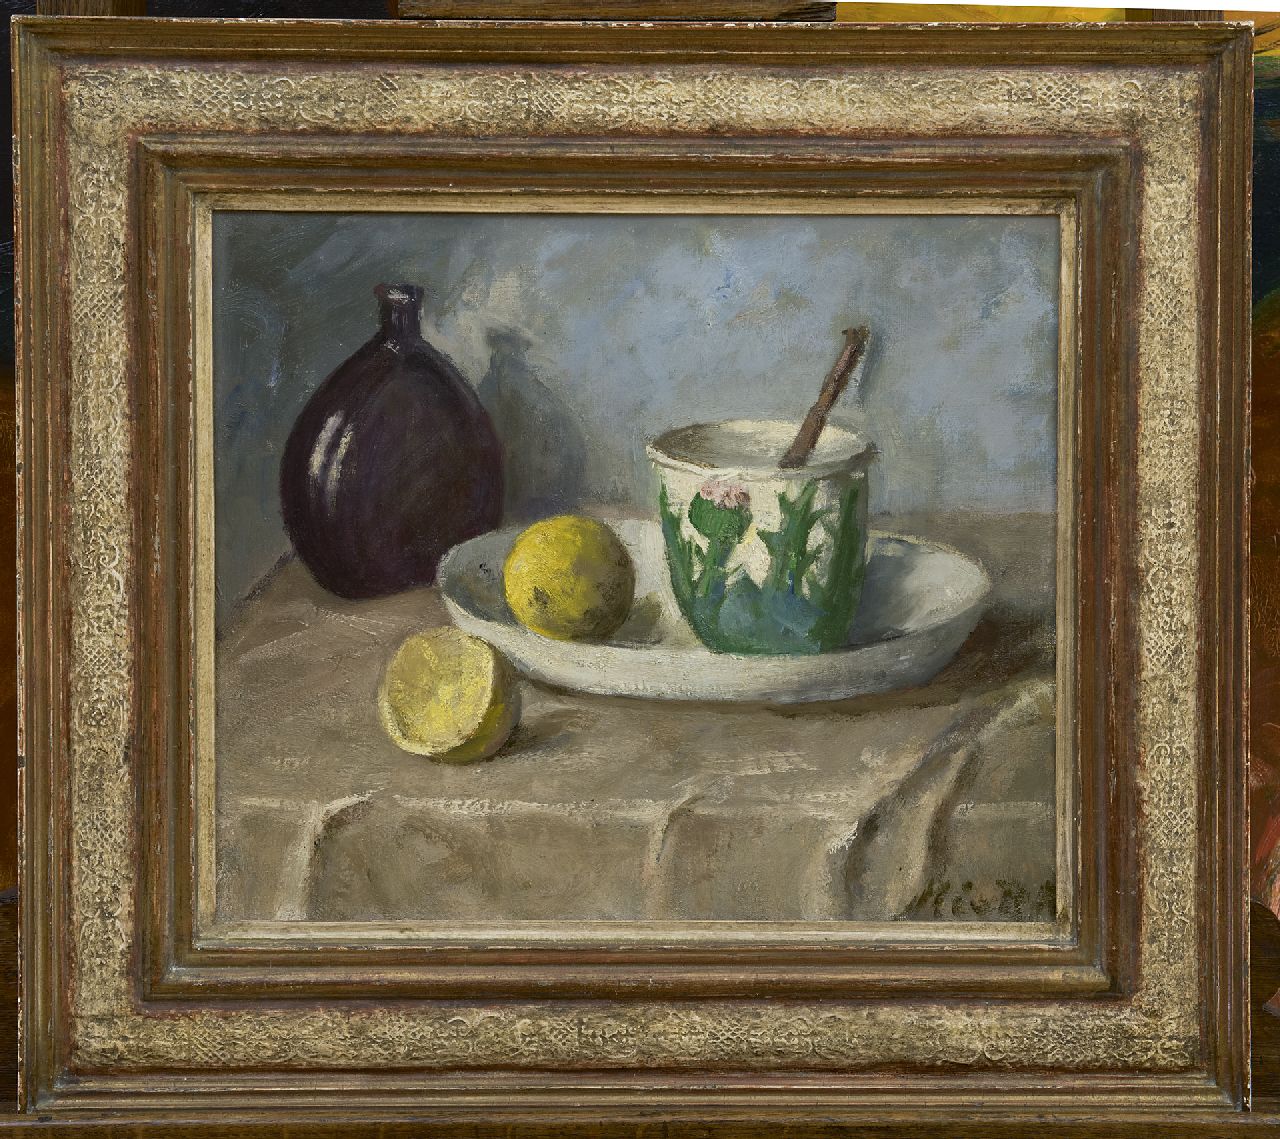 Regteren Altena M.E. van | 'Marie' Engelina van Regteren Altena, A still life with a dish, a cyp and lemons, oil on canvas 34.0 x 40.3 cm, signed l.r.